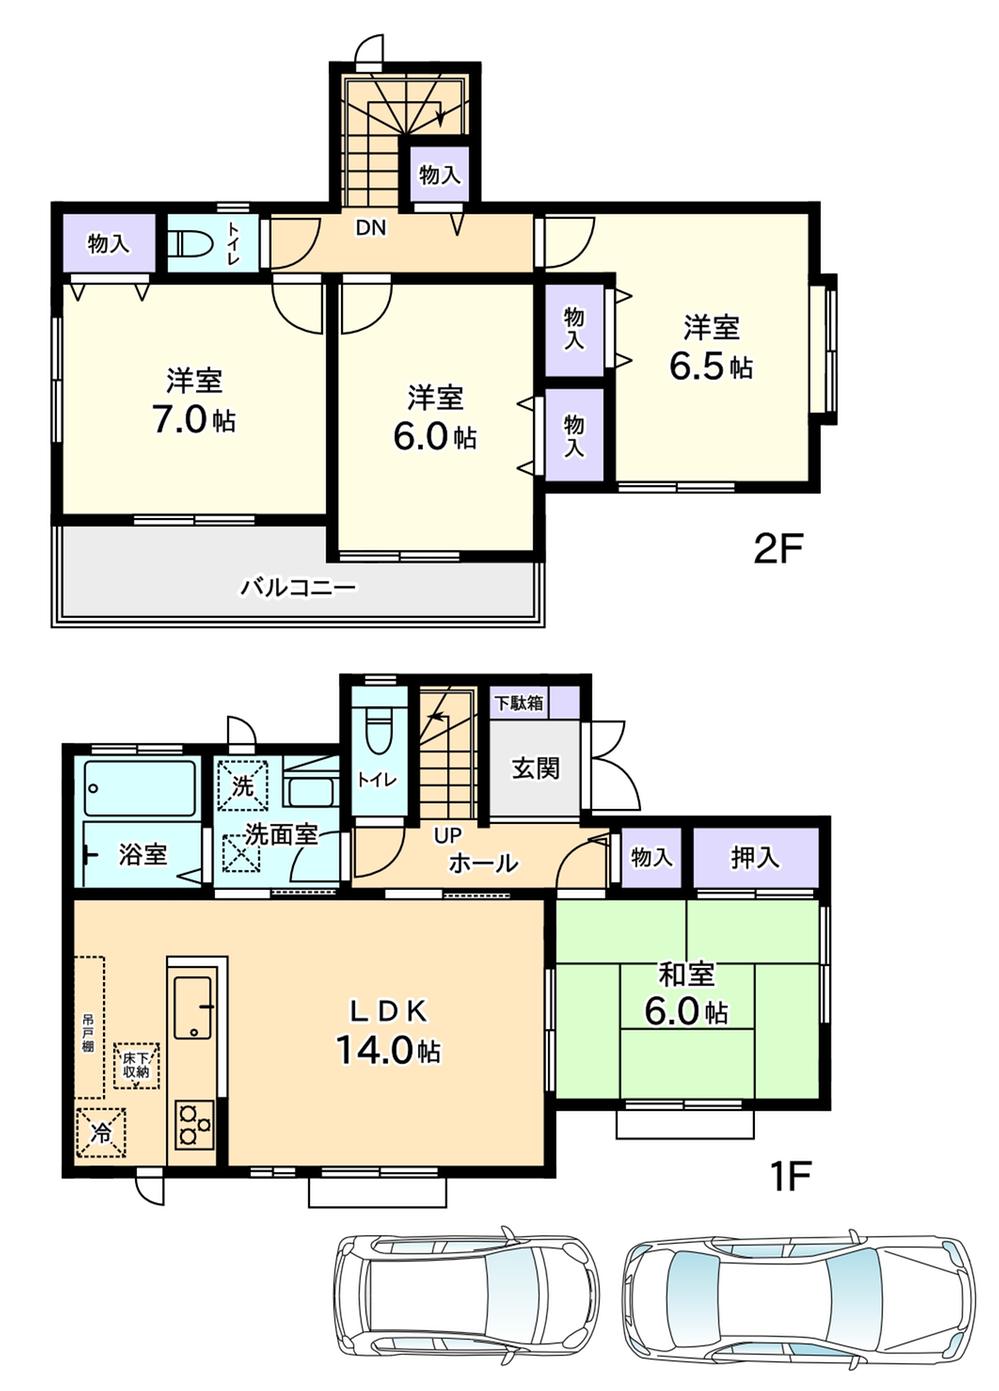 Floor plan. (K Building), Price 42,800,000 yen, 4LDK, Land area 125.71 sq m , Building area 95.22 sq m